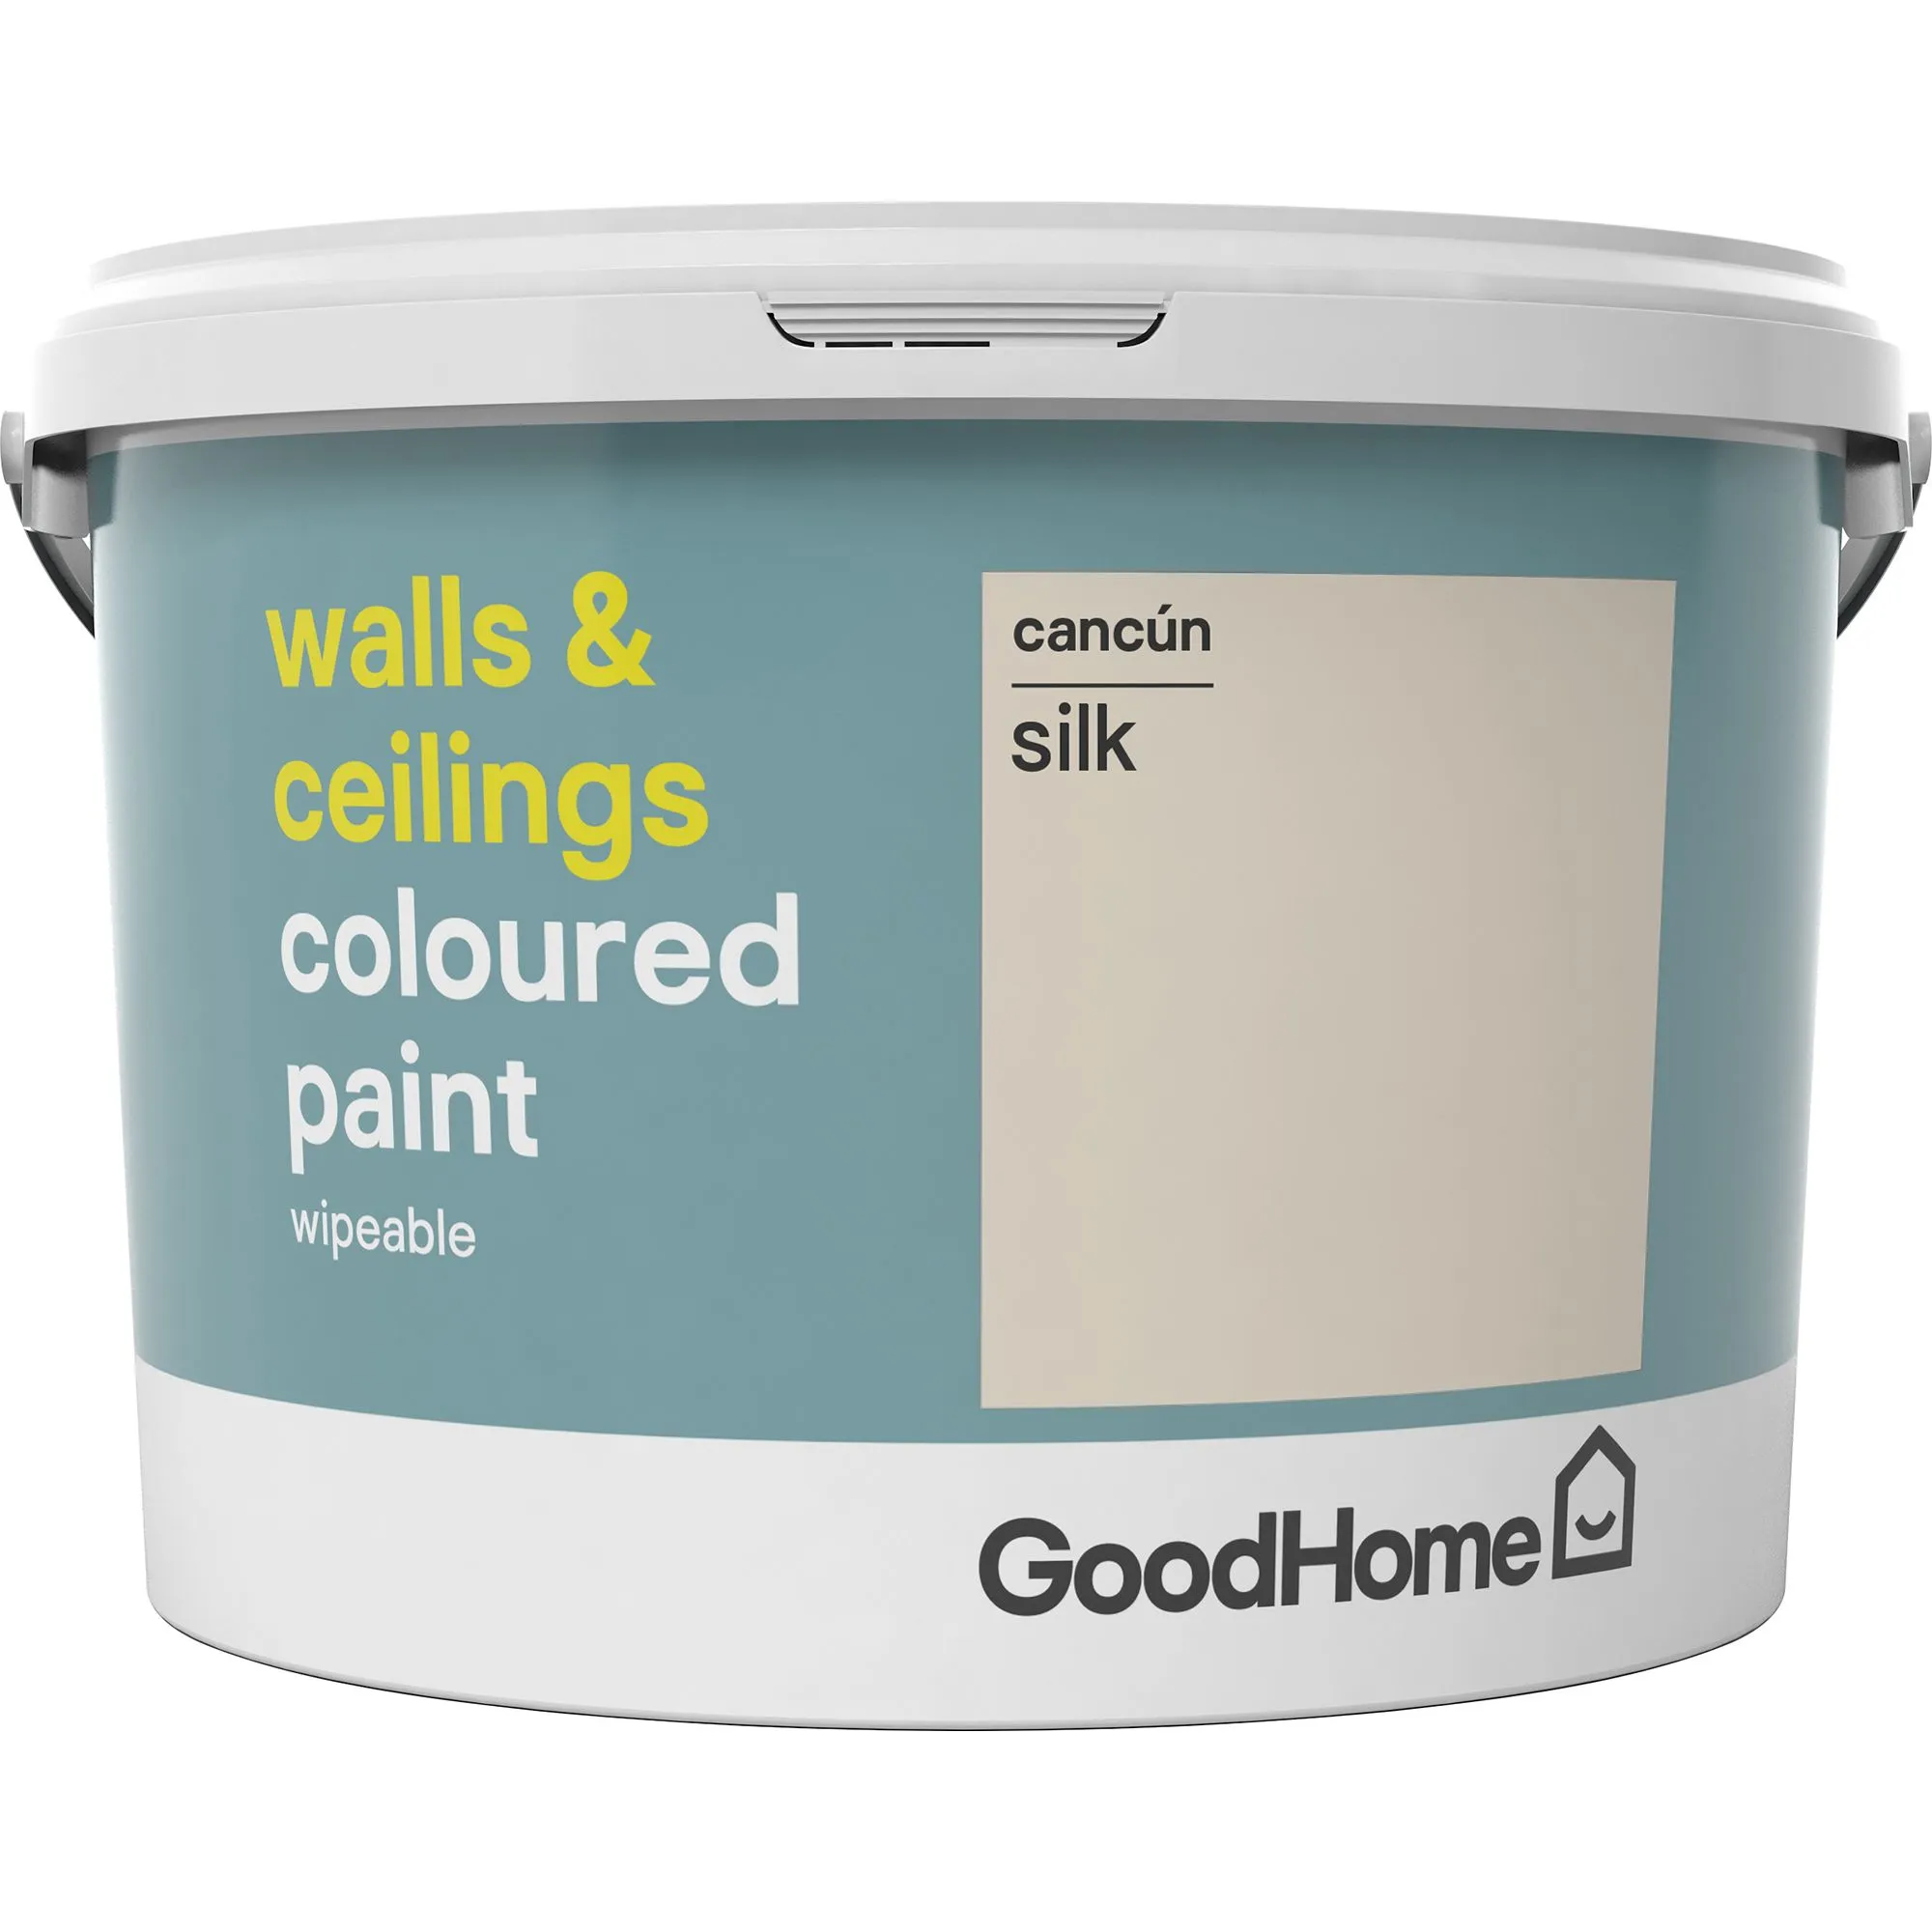 GoodHome Walls & ceilings Cancun Silk Emulsion paint, 2.5L